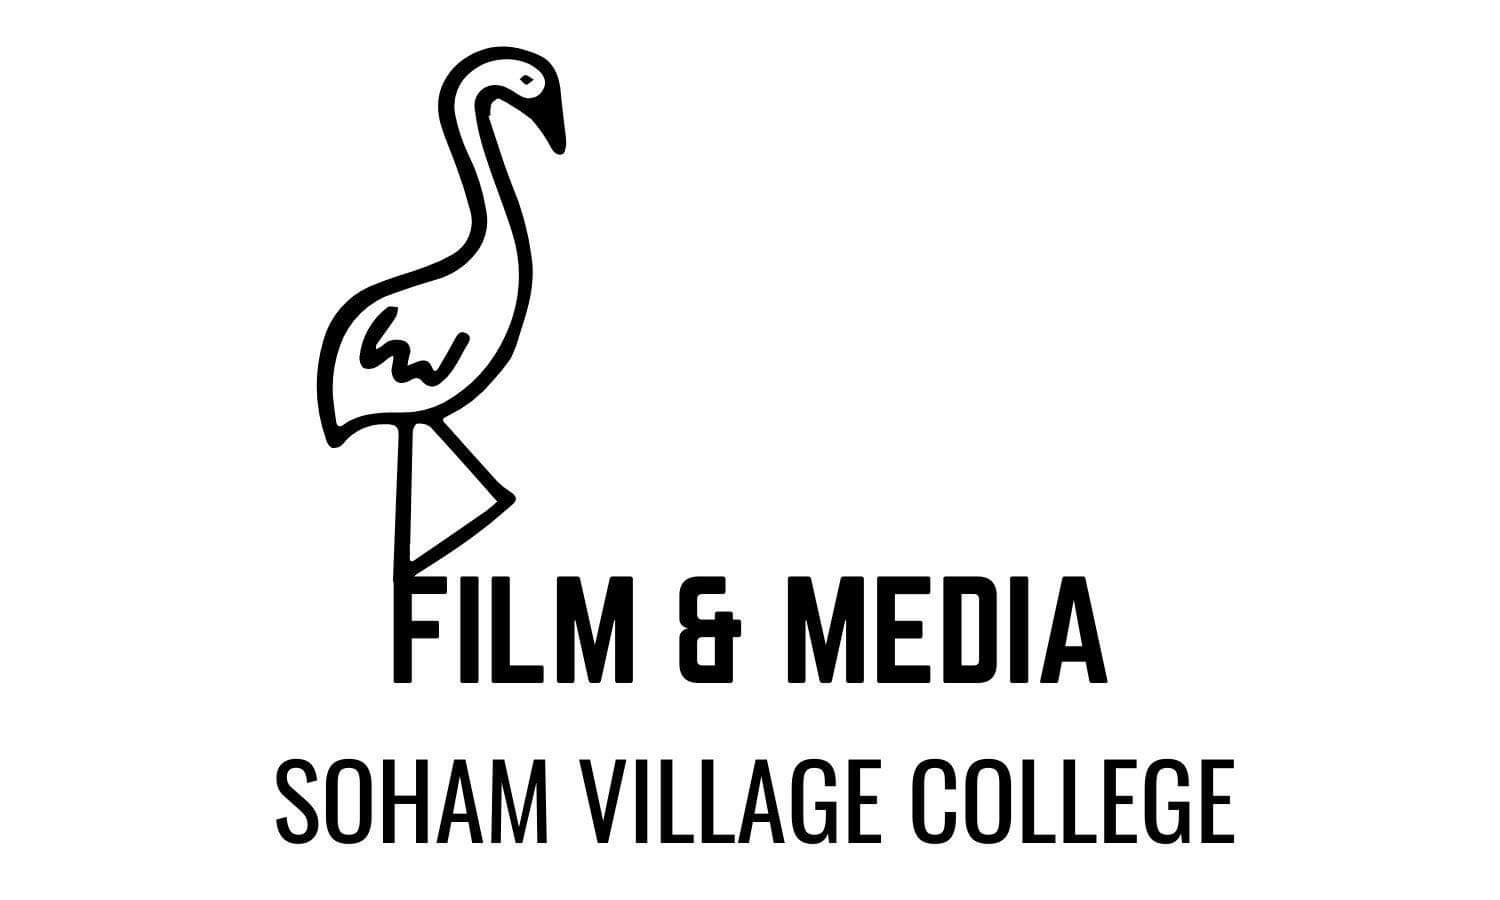 A bird - film and media studies logo